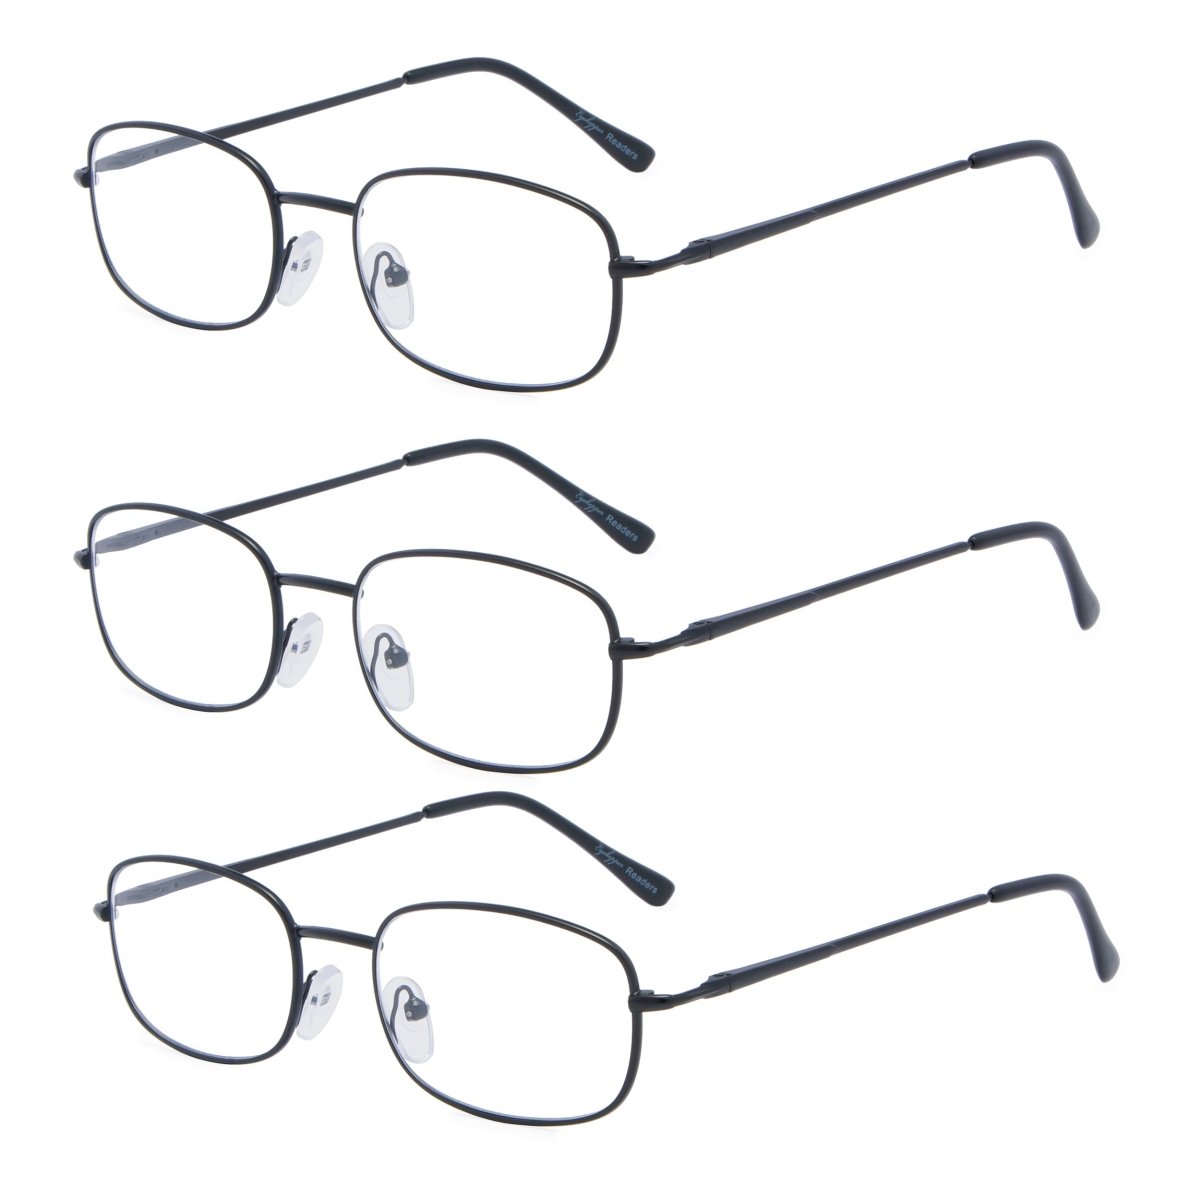 3 Pack Metal Frame Reading Glasses R3232eyekeeper.com